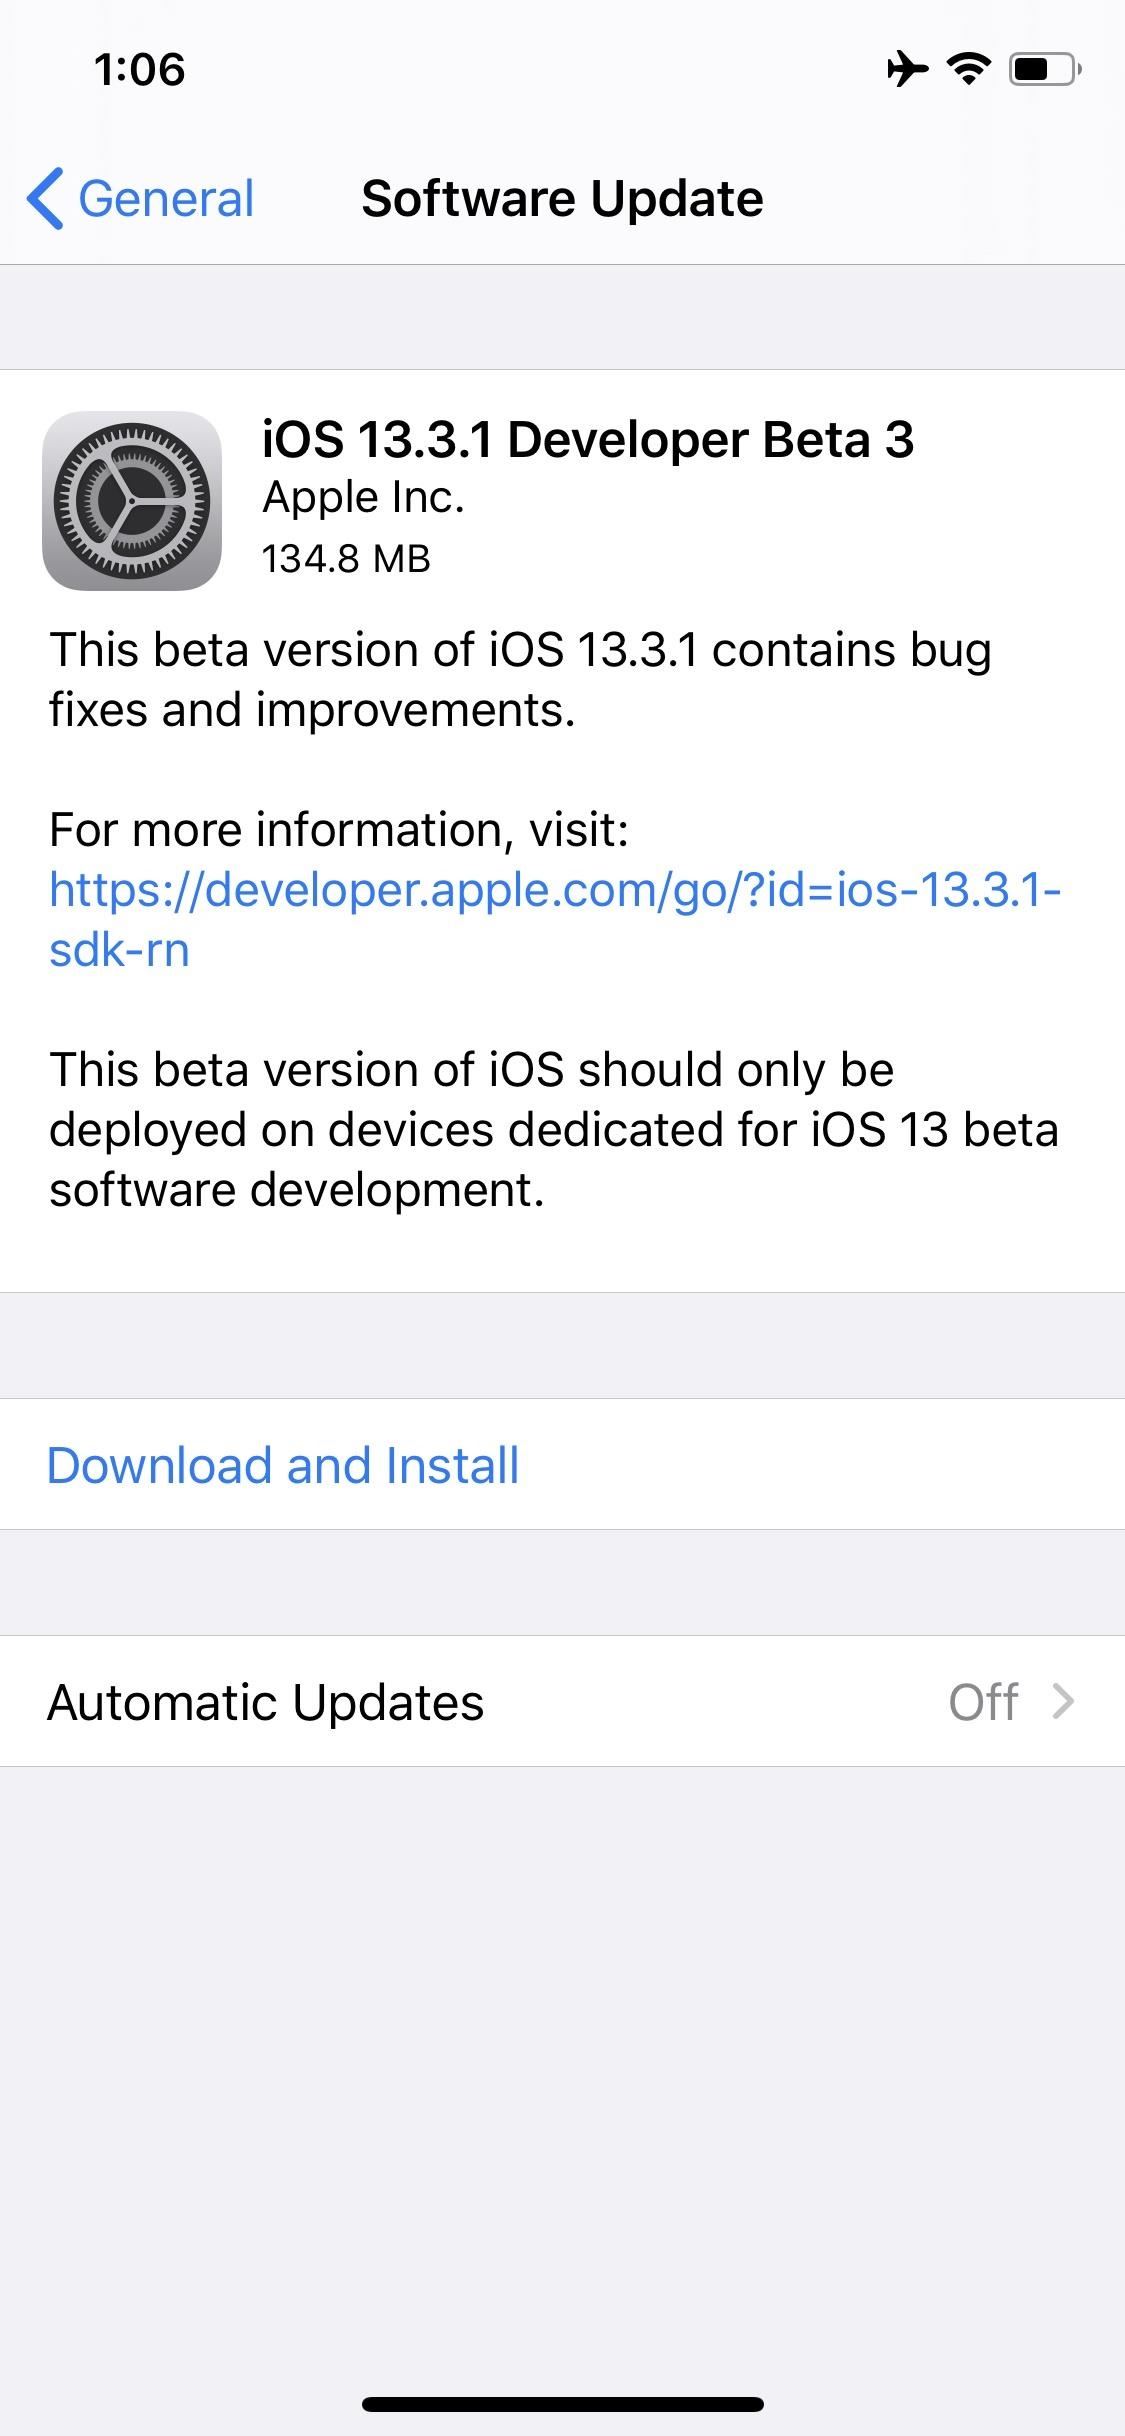 Apple Releases iOS 13.3.1 Developer Beta 3 for iPhone